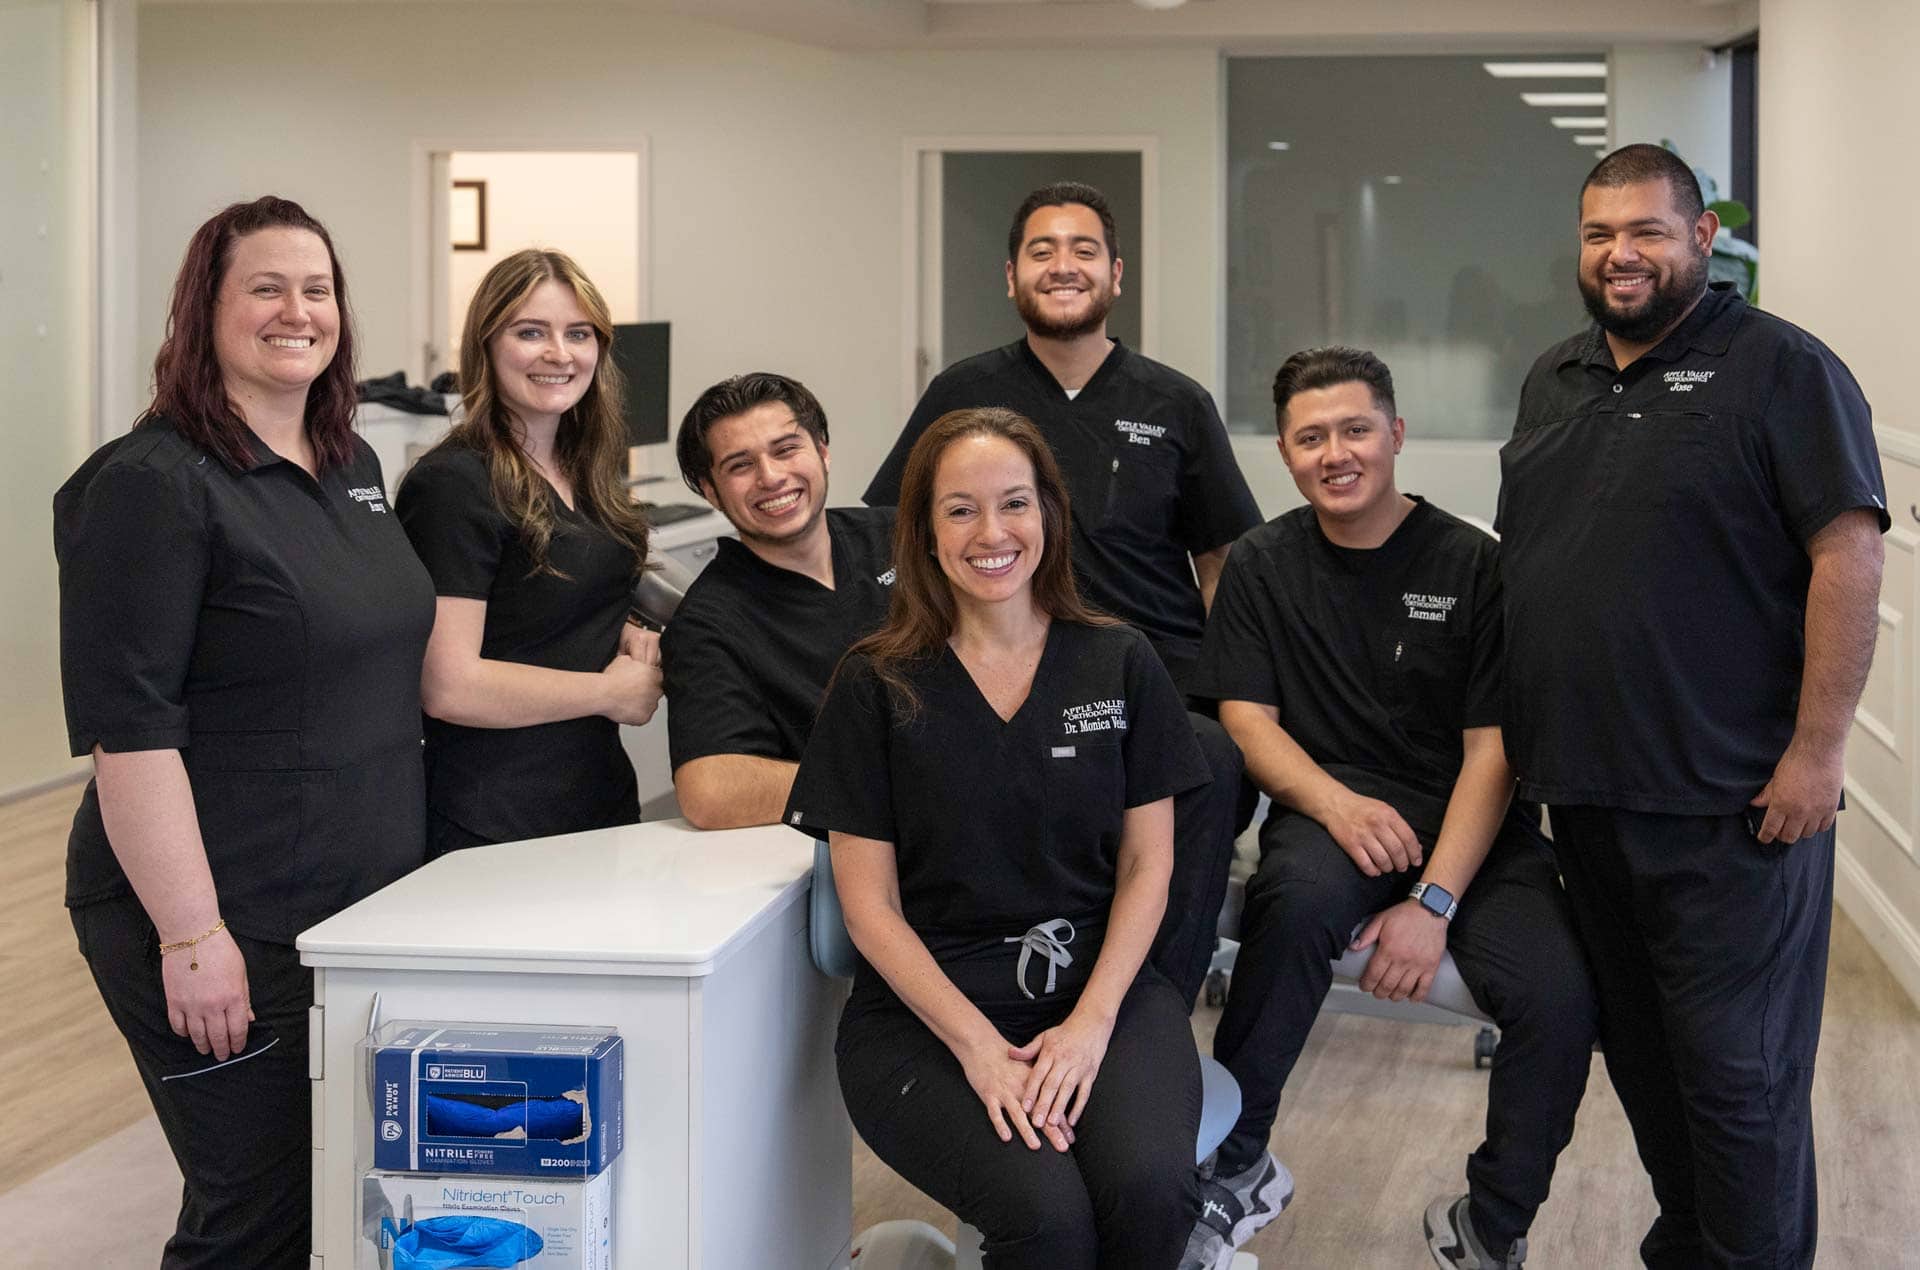 meet the Apple Valley Orthodontics team